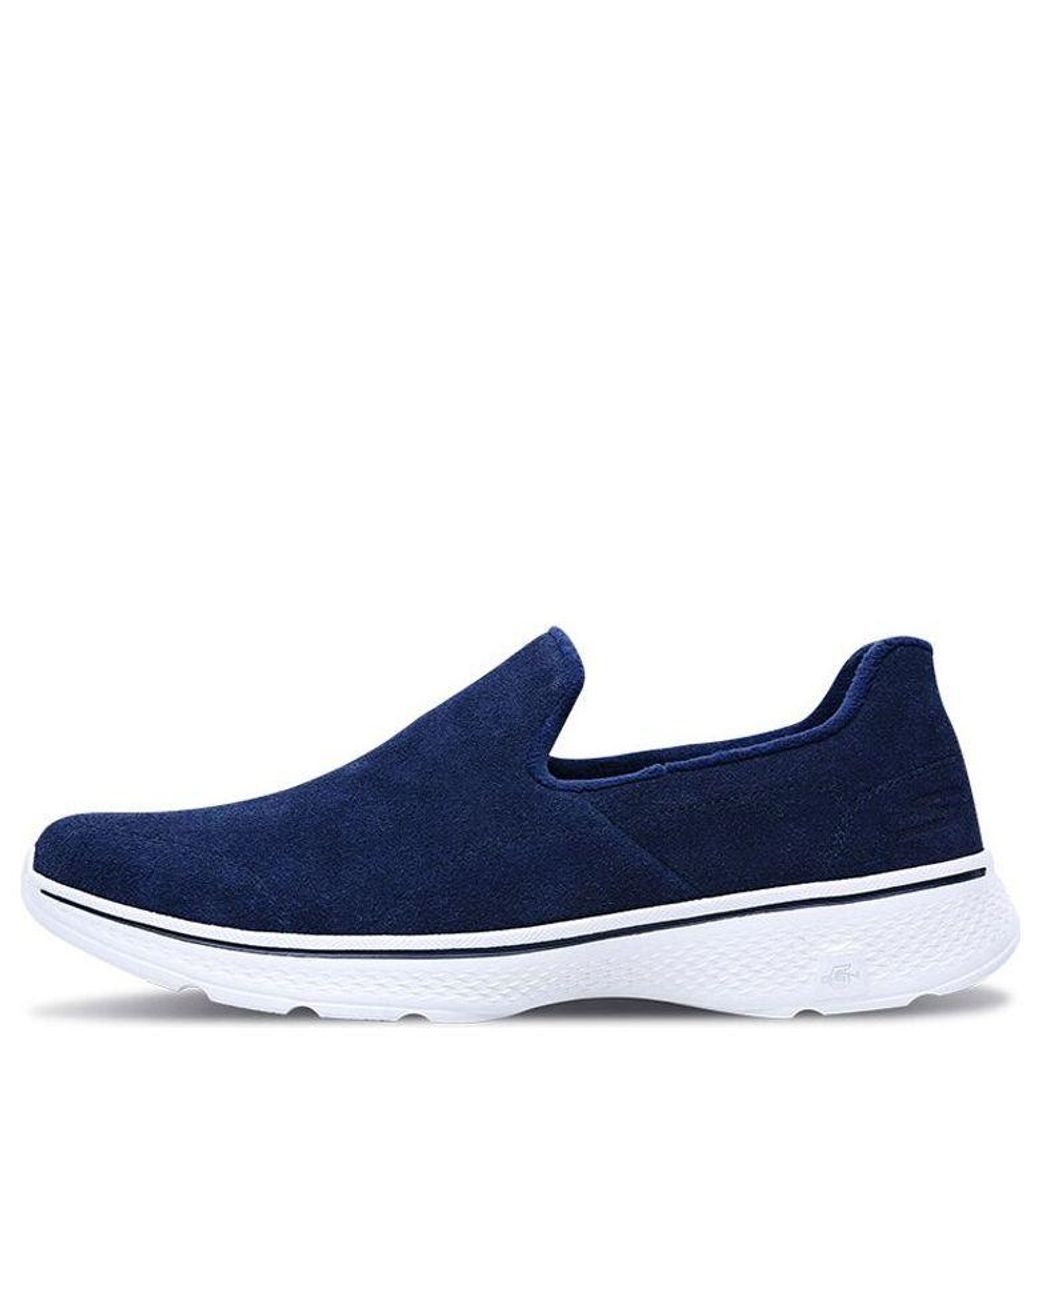 Præfiks Mart i mellemtiden Skechers Go Walk4 Light Casual Lazy Shoes Blue/white for Men | Lyst